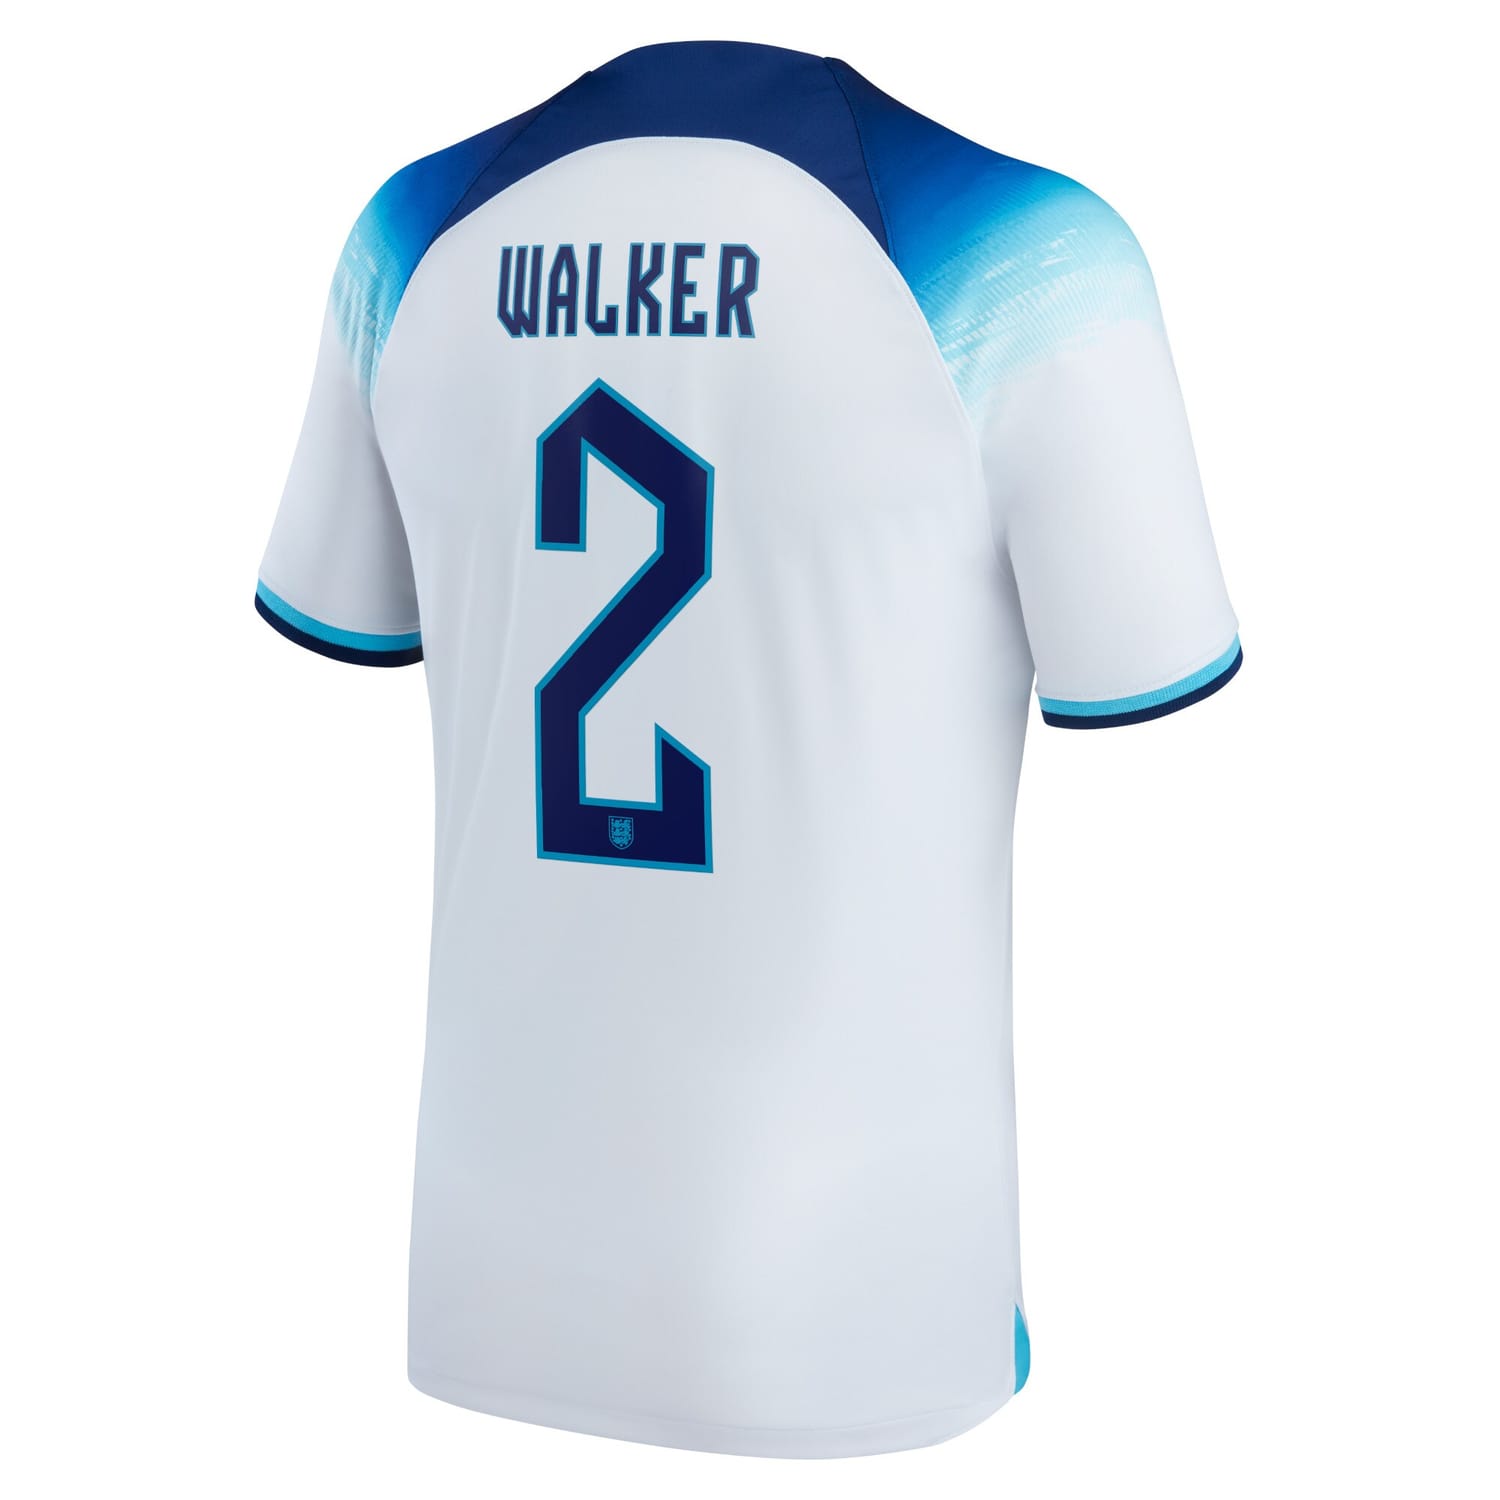 England National Team Home Jersey Shirt 2022 player Kyle Walker 2 printing for Men